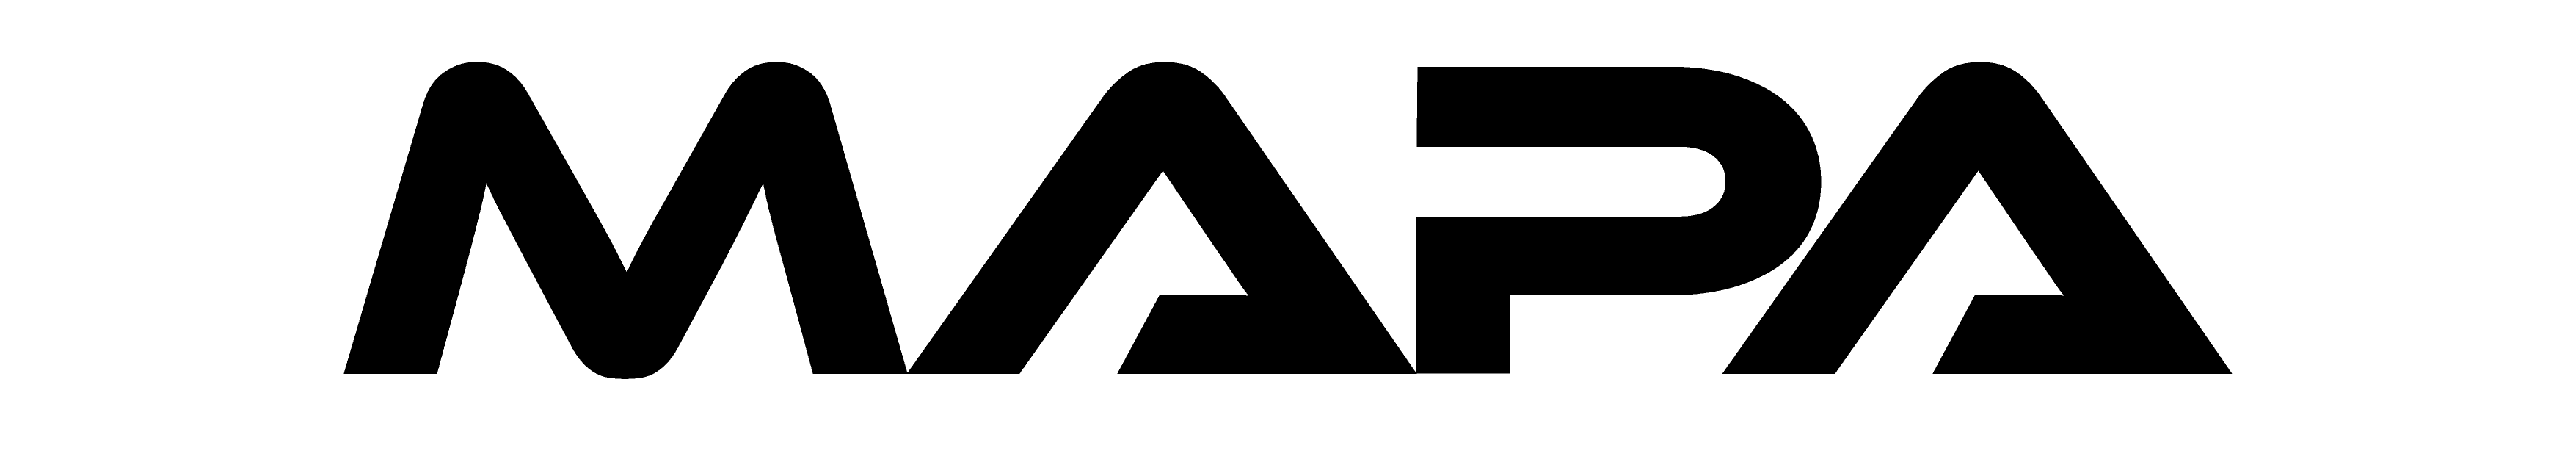 logo-final-2020-03